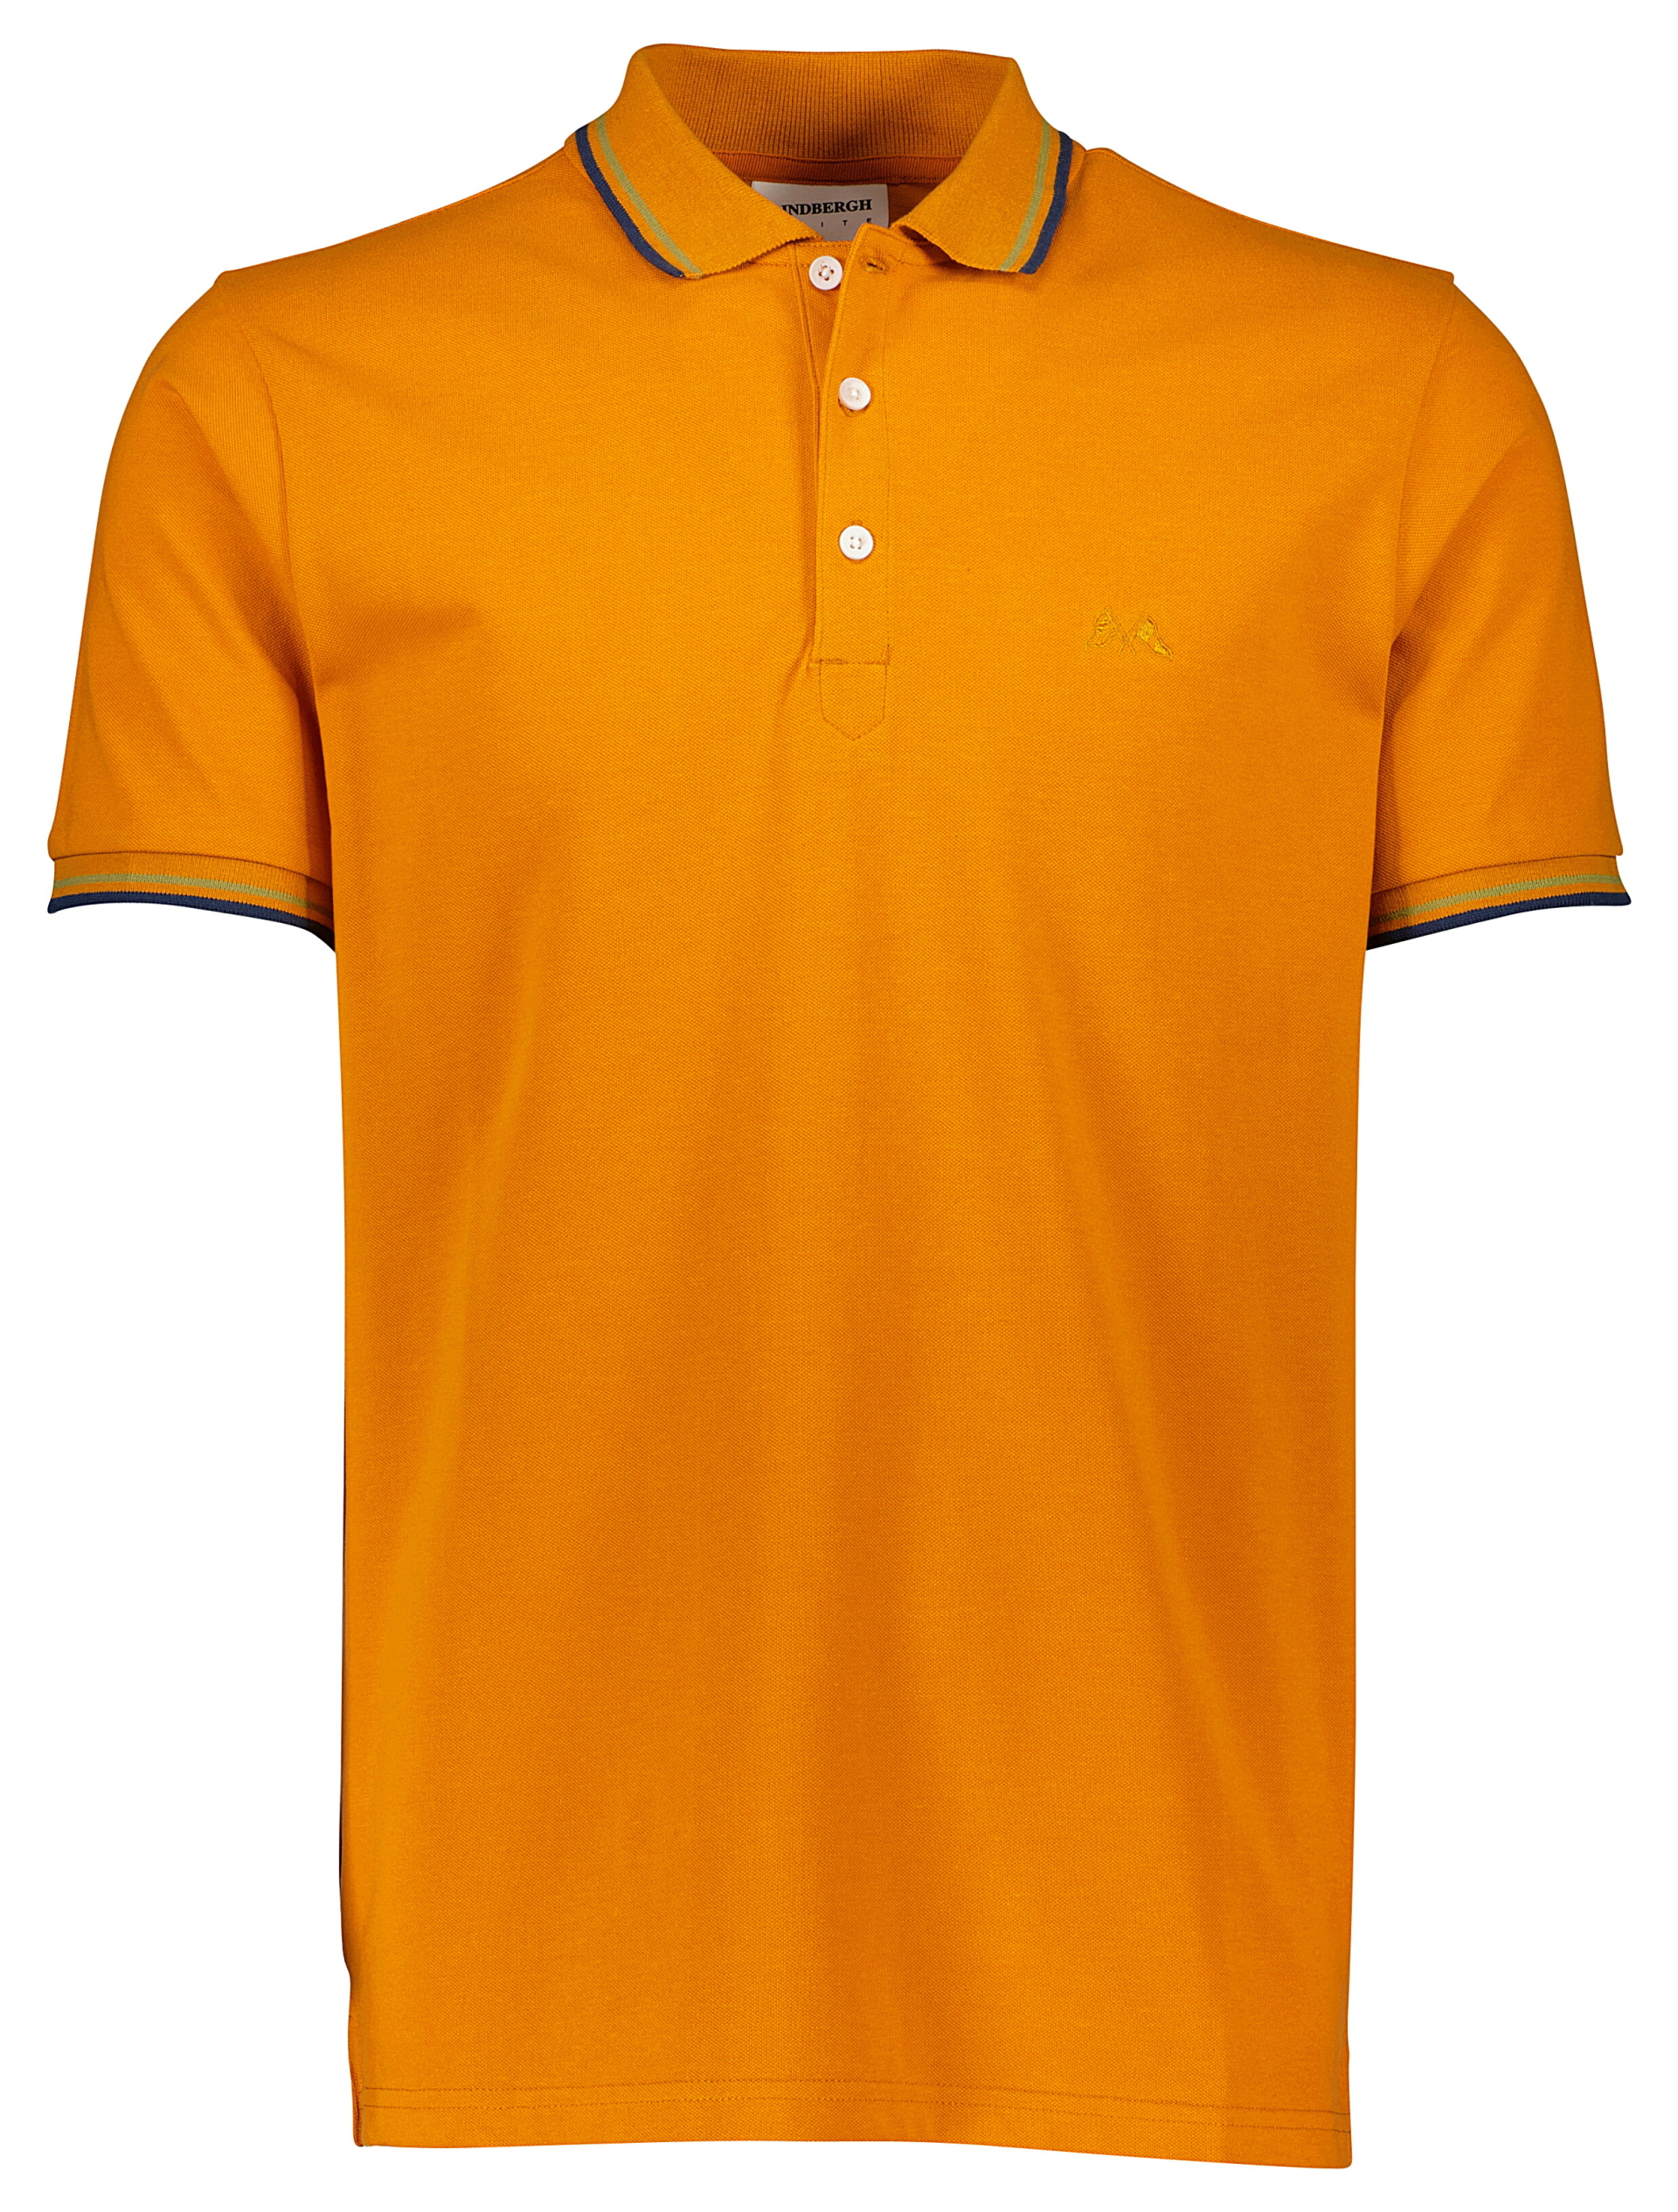 Lindbergh Poloshirt orange / lt orange